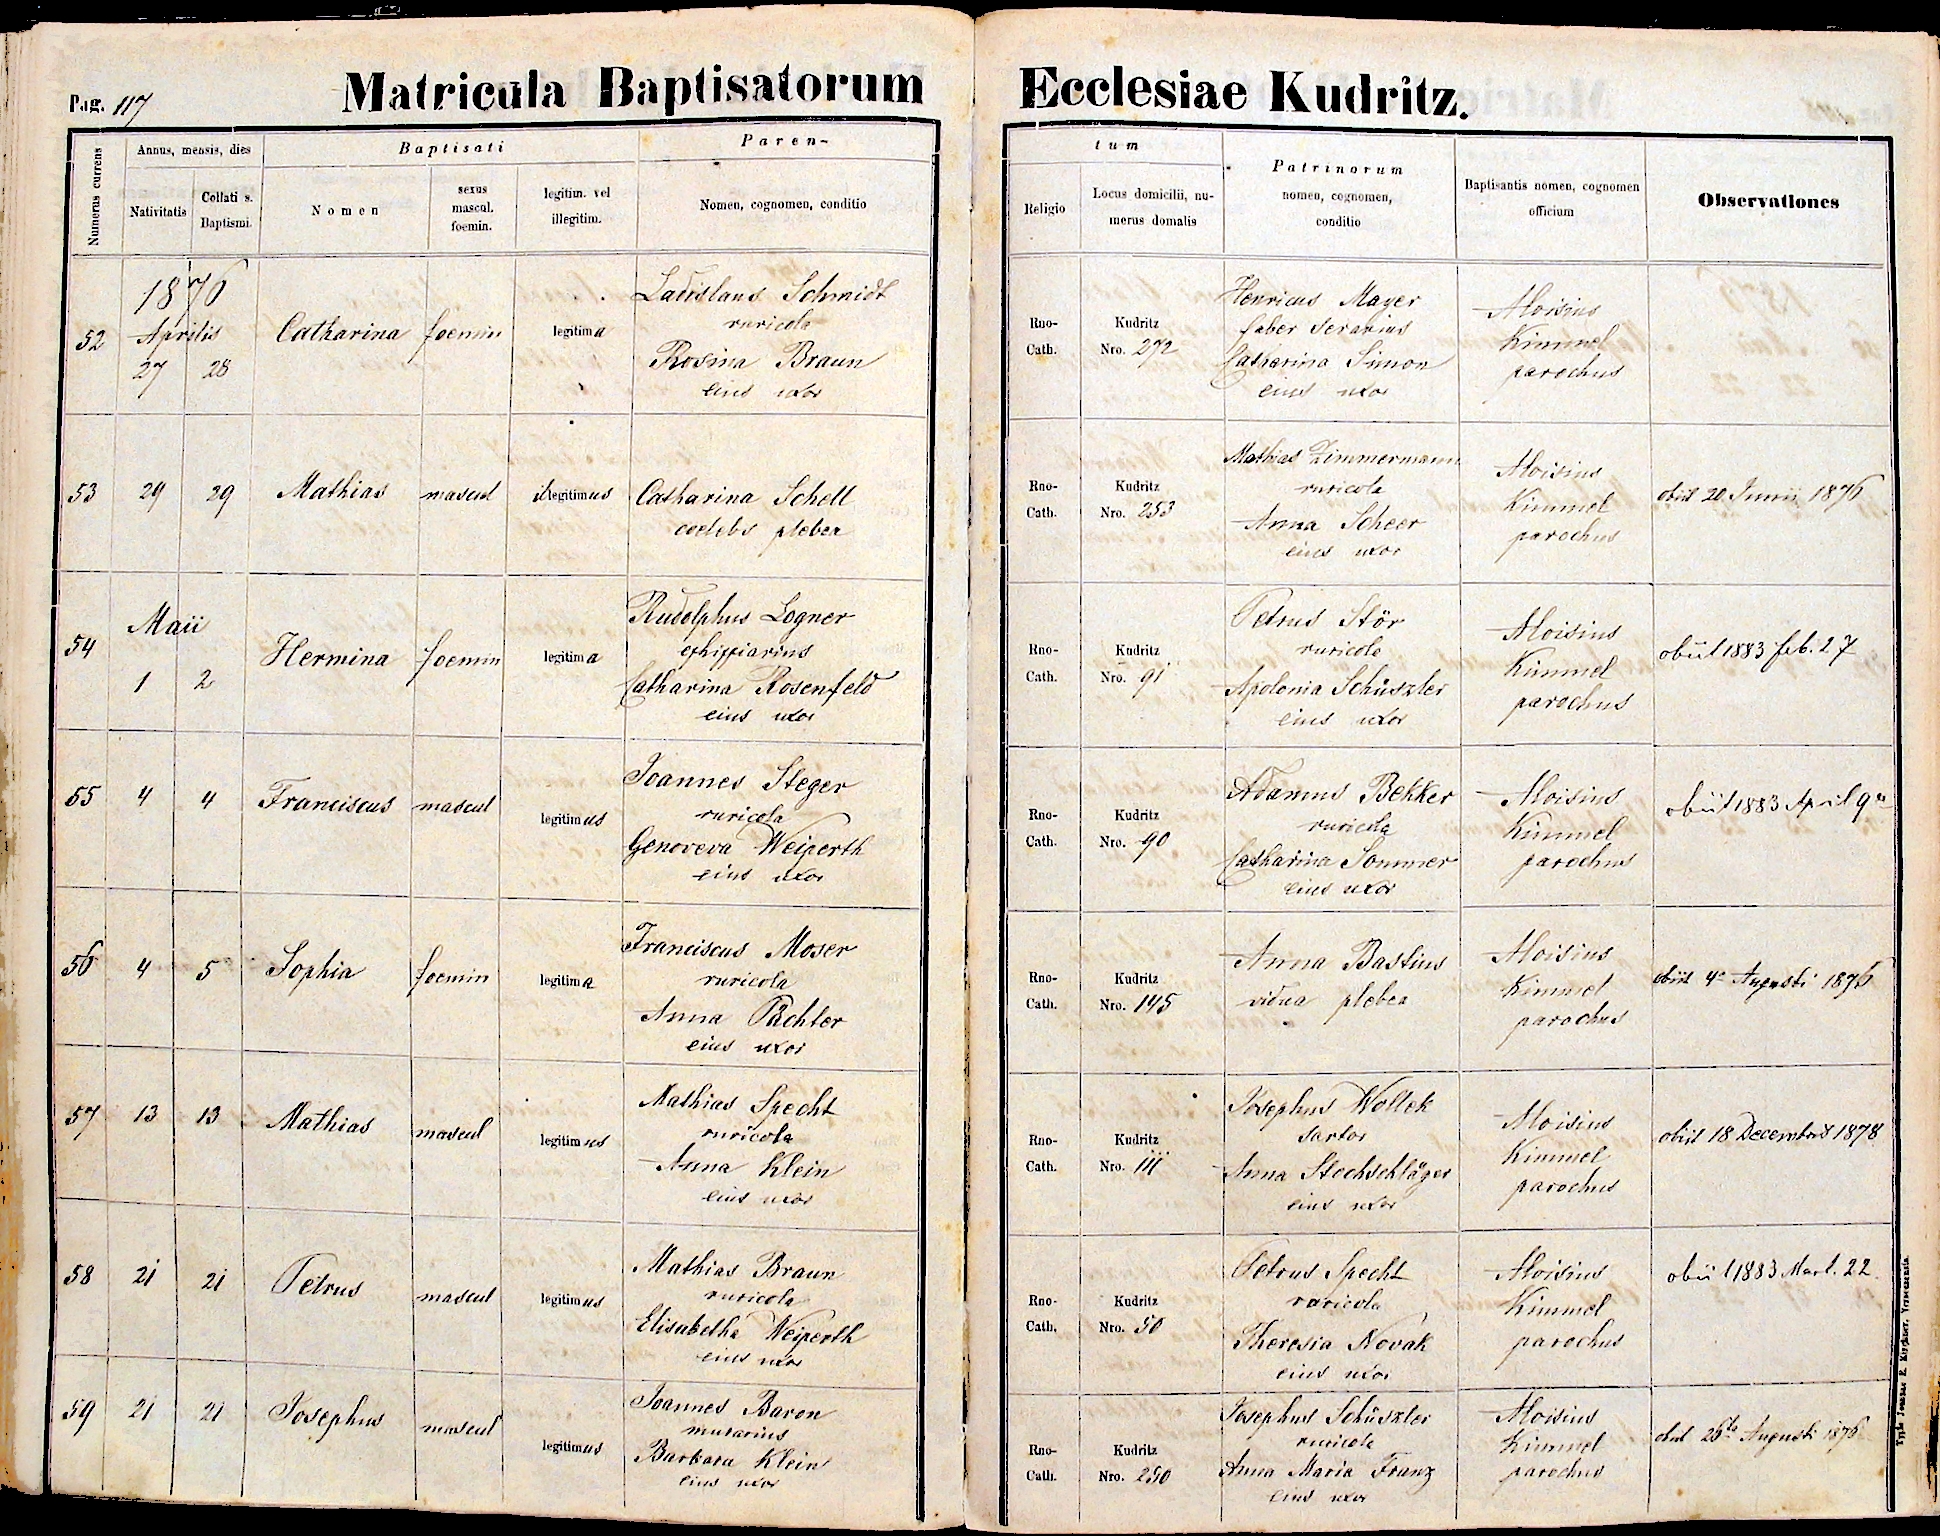 images/church_records/BIRTHS/1870-1879B/1876/117